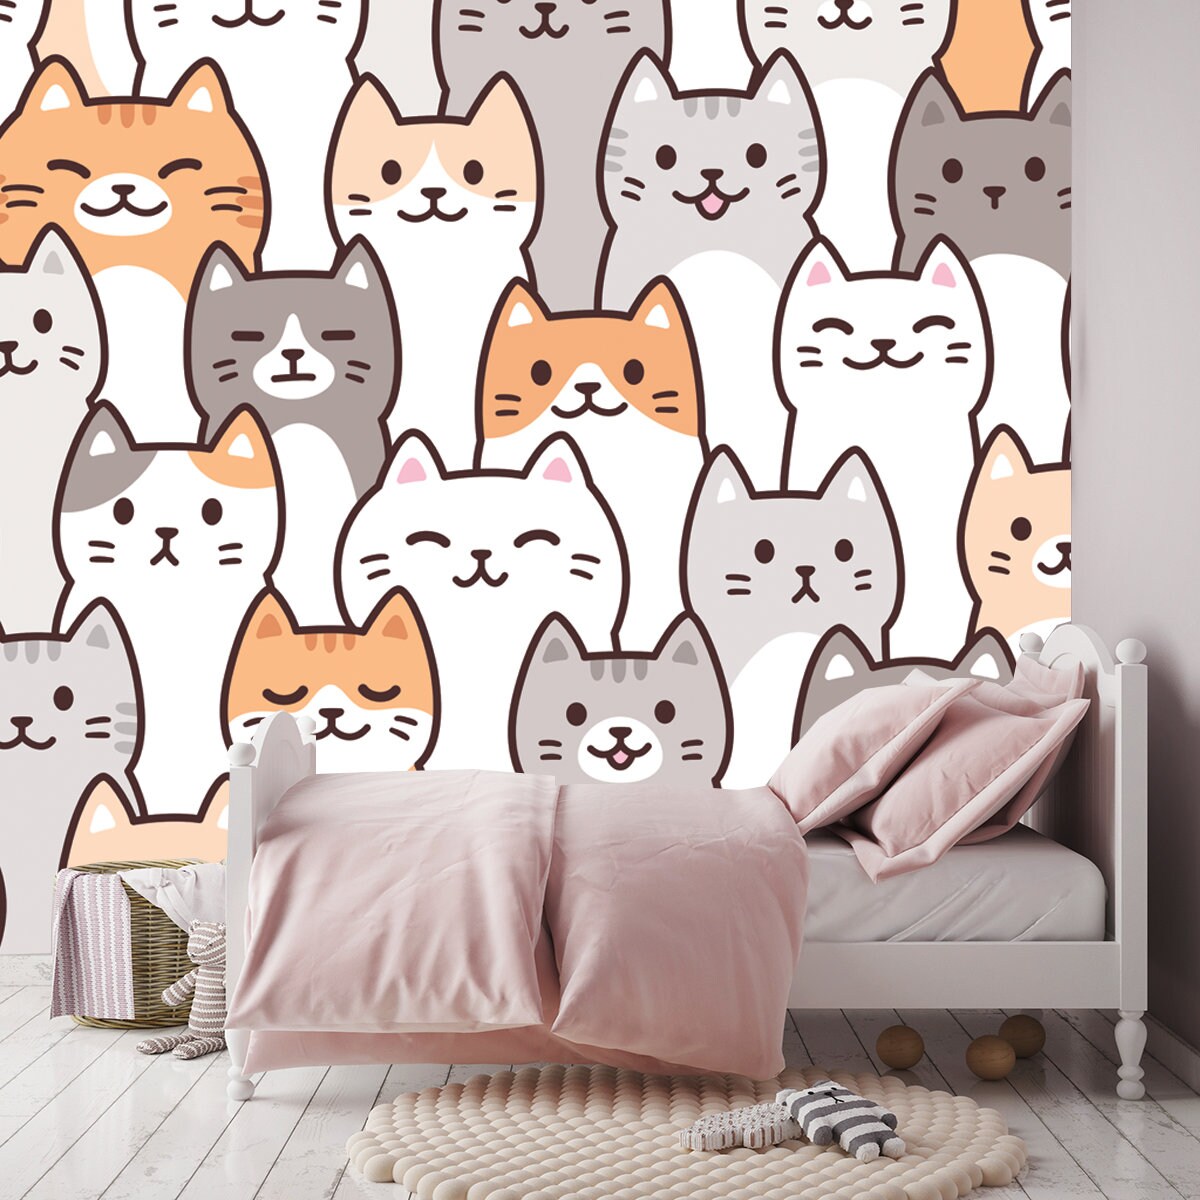 Cute Cartoon Doodle Cats Pattern. Kawaii Crowd of Cat Faces Wallpaper Girl Bedroom Mural